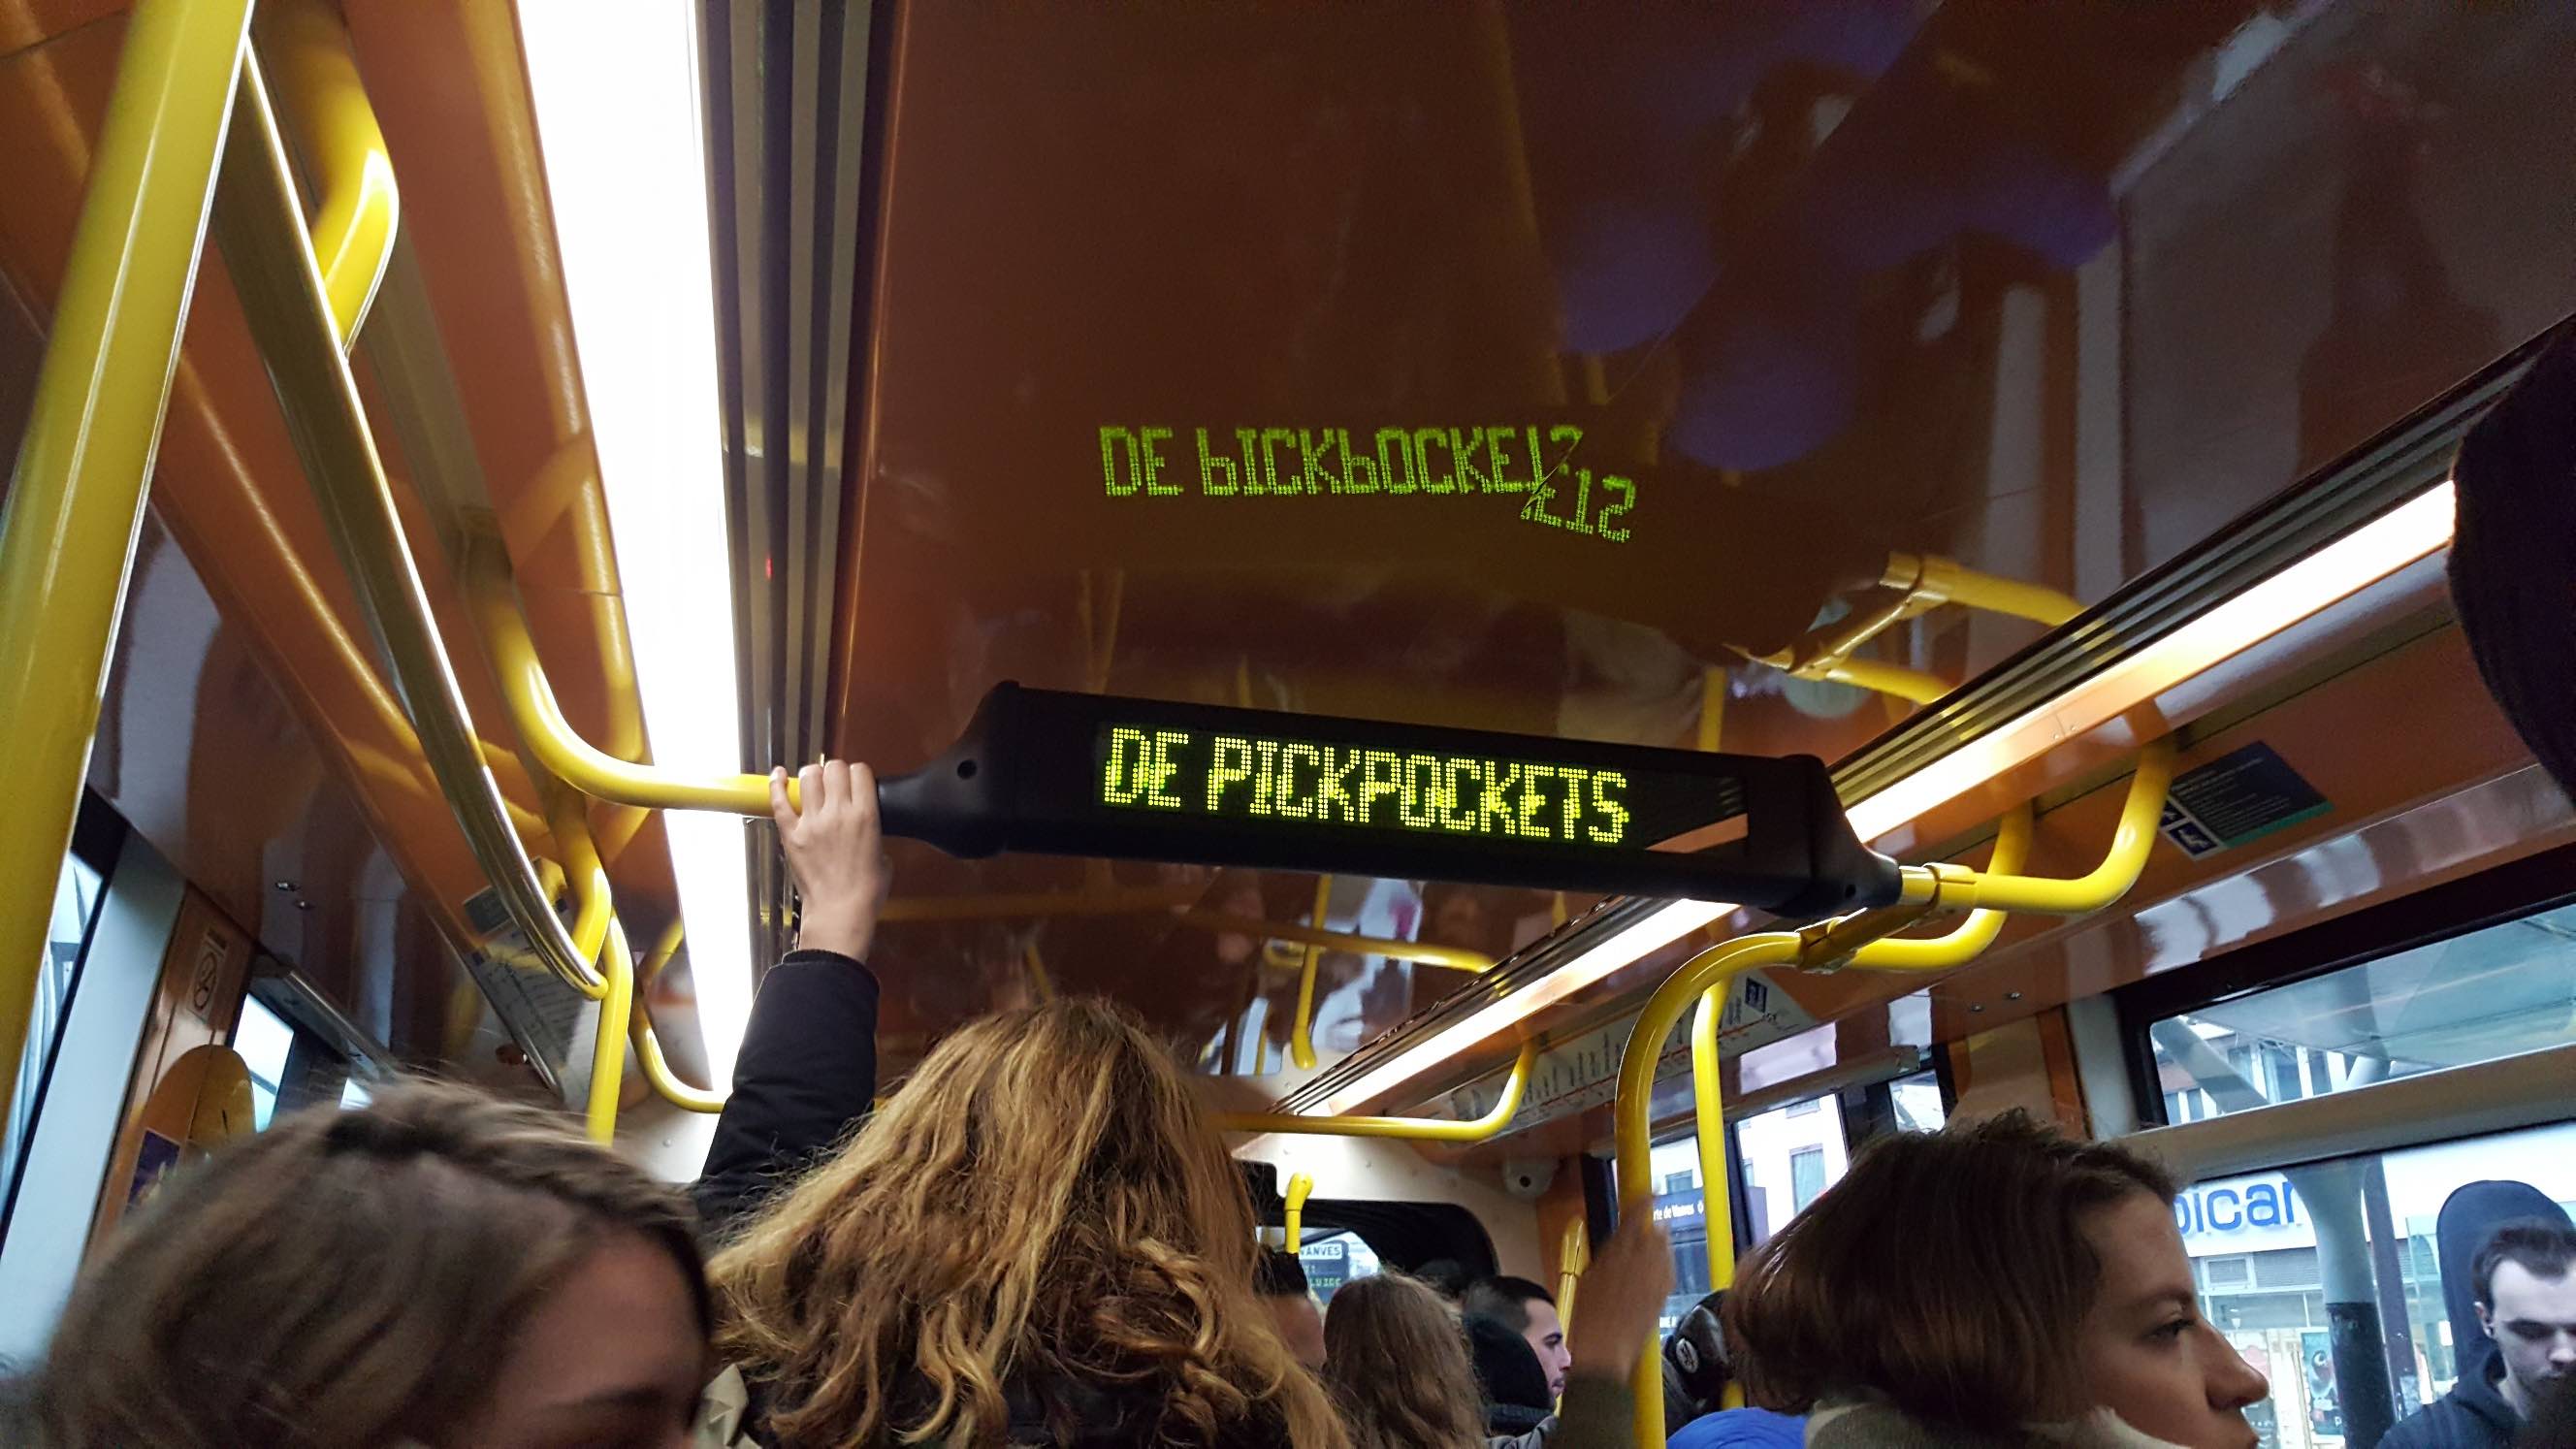 An overhead sign on a Paris tram warns passengers about pickpockets.